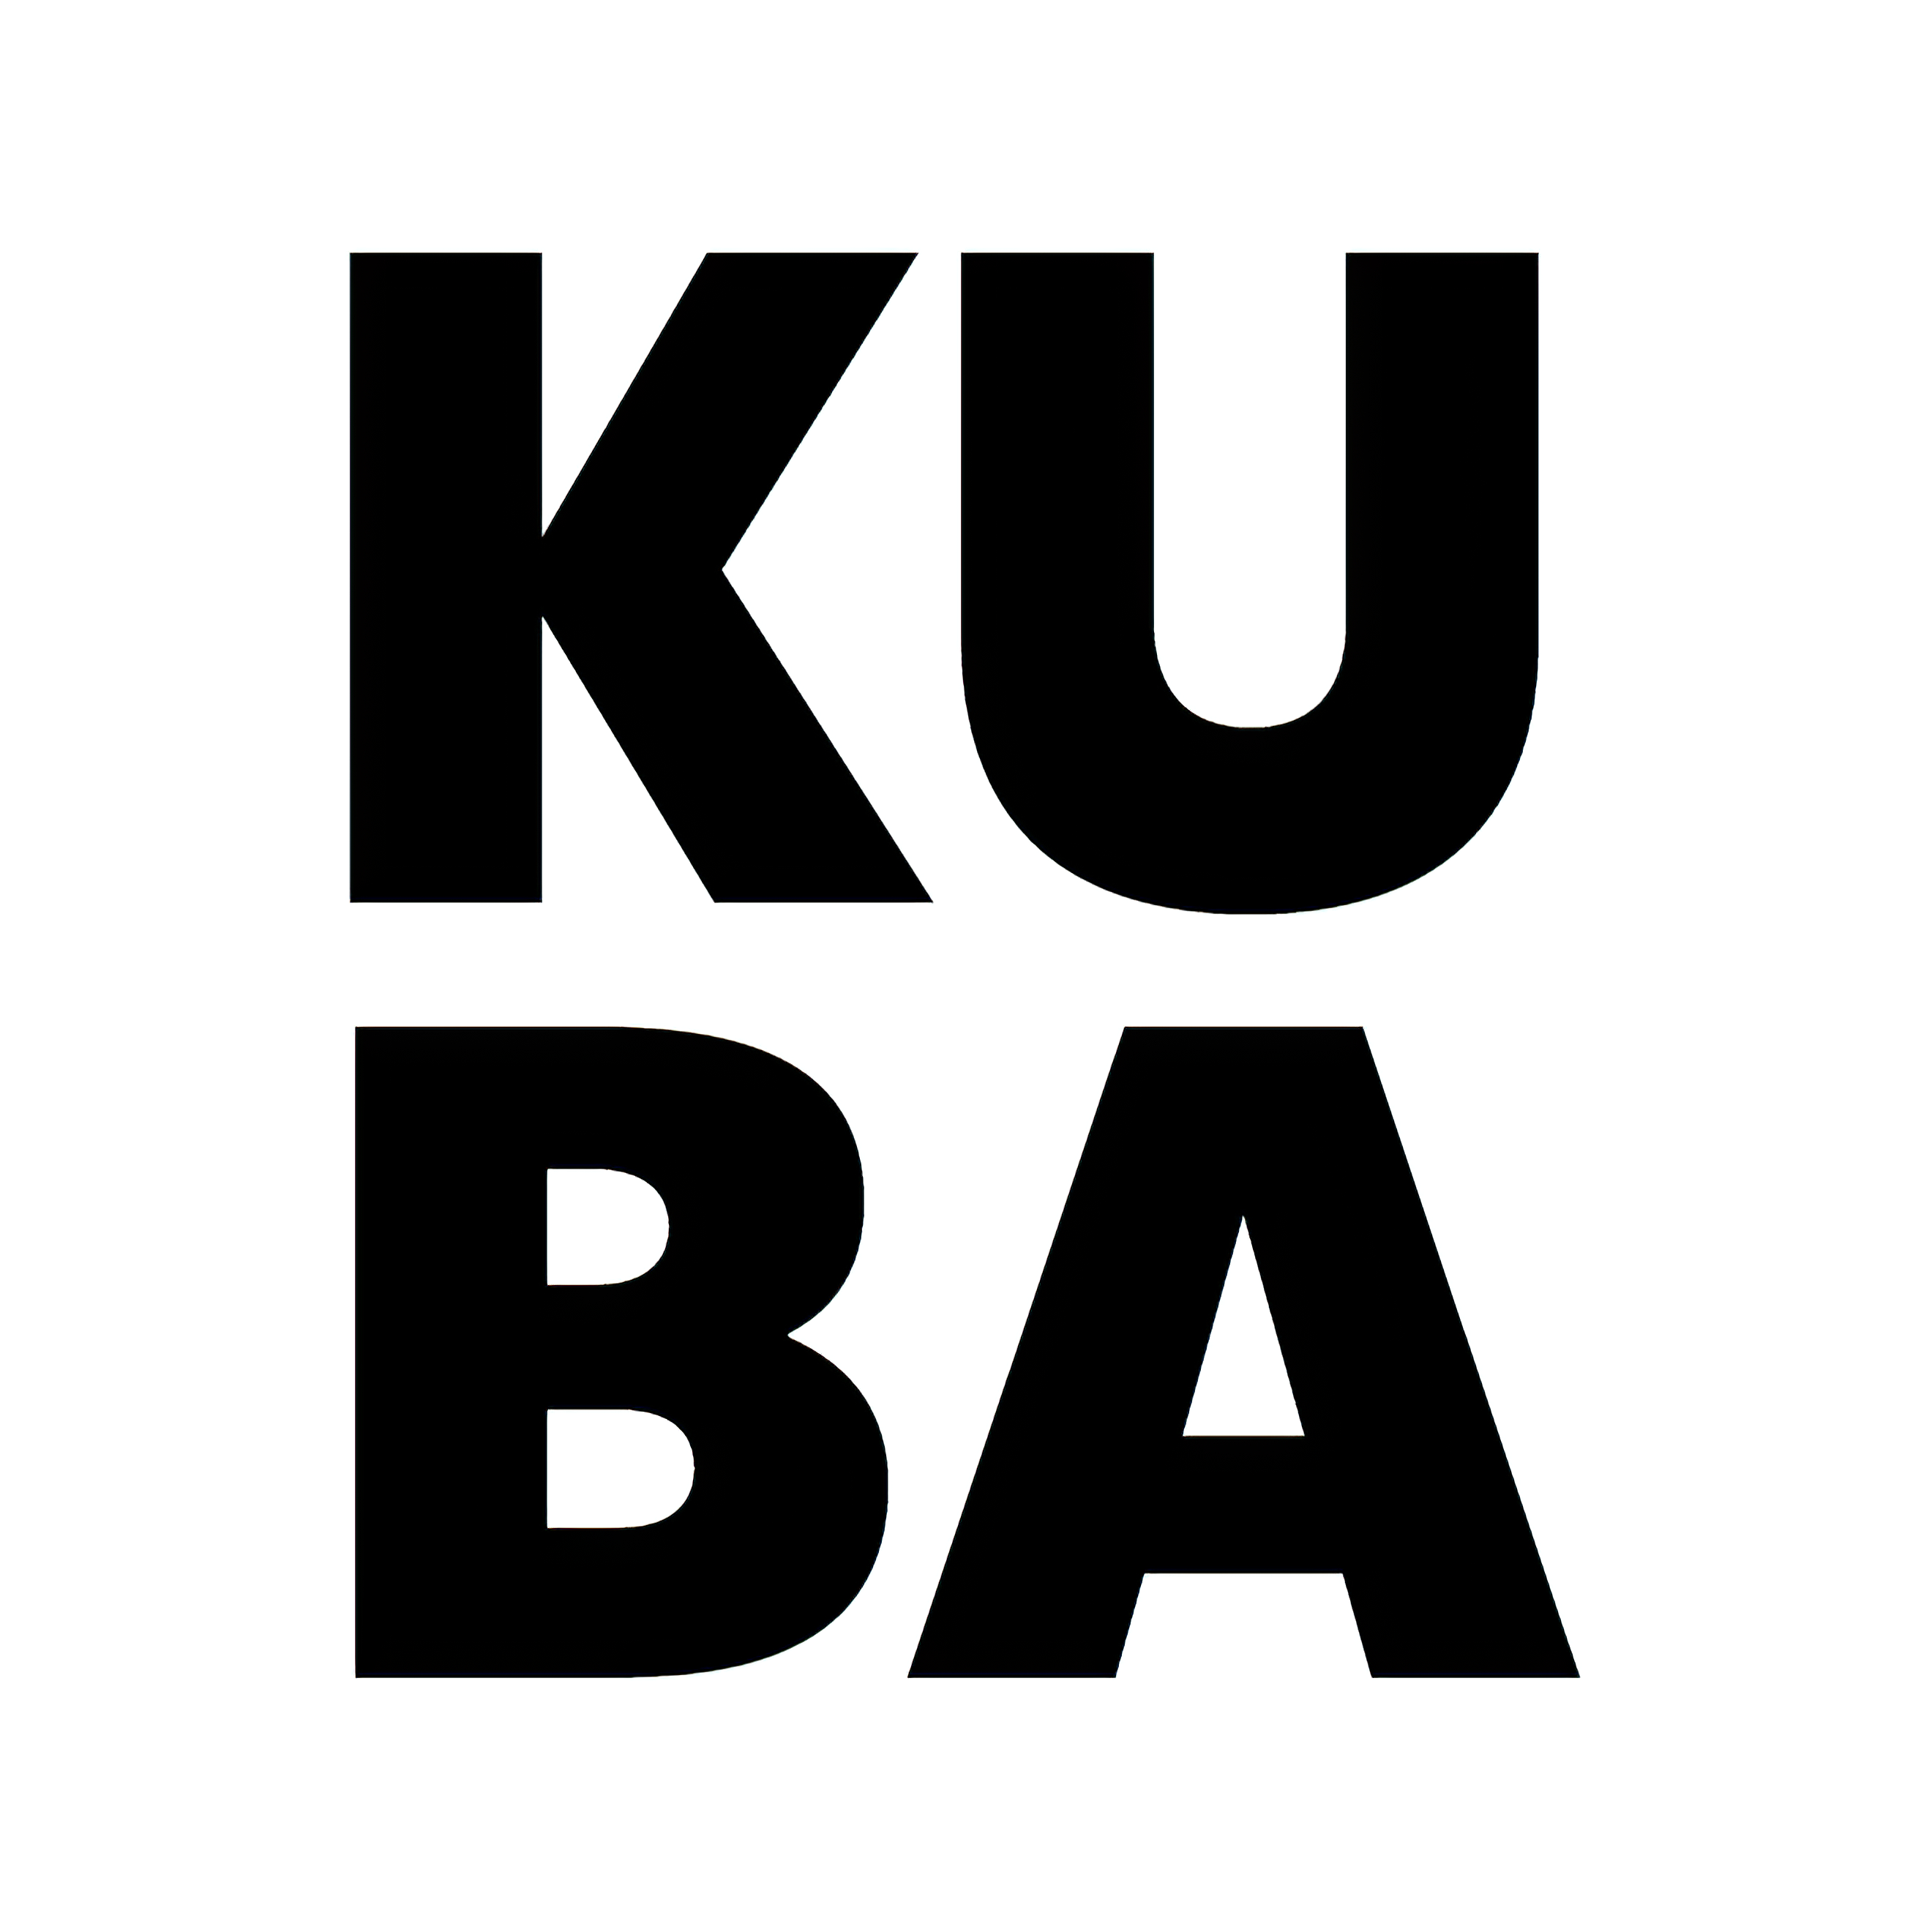 Kuba and The World